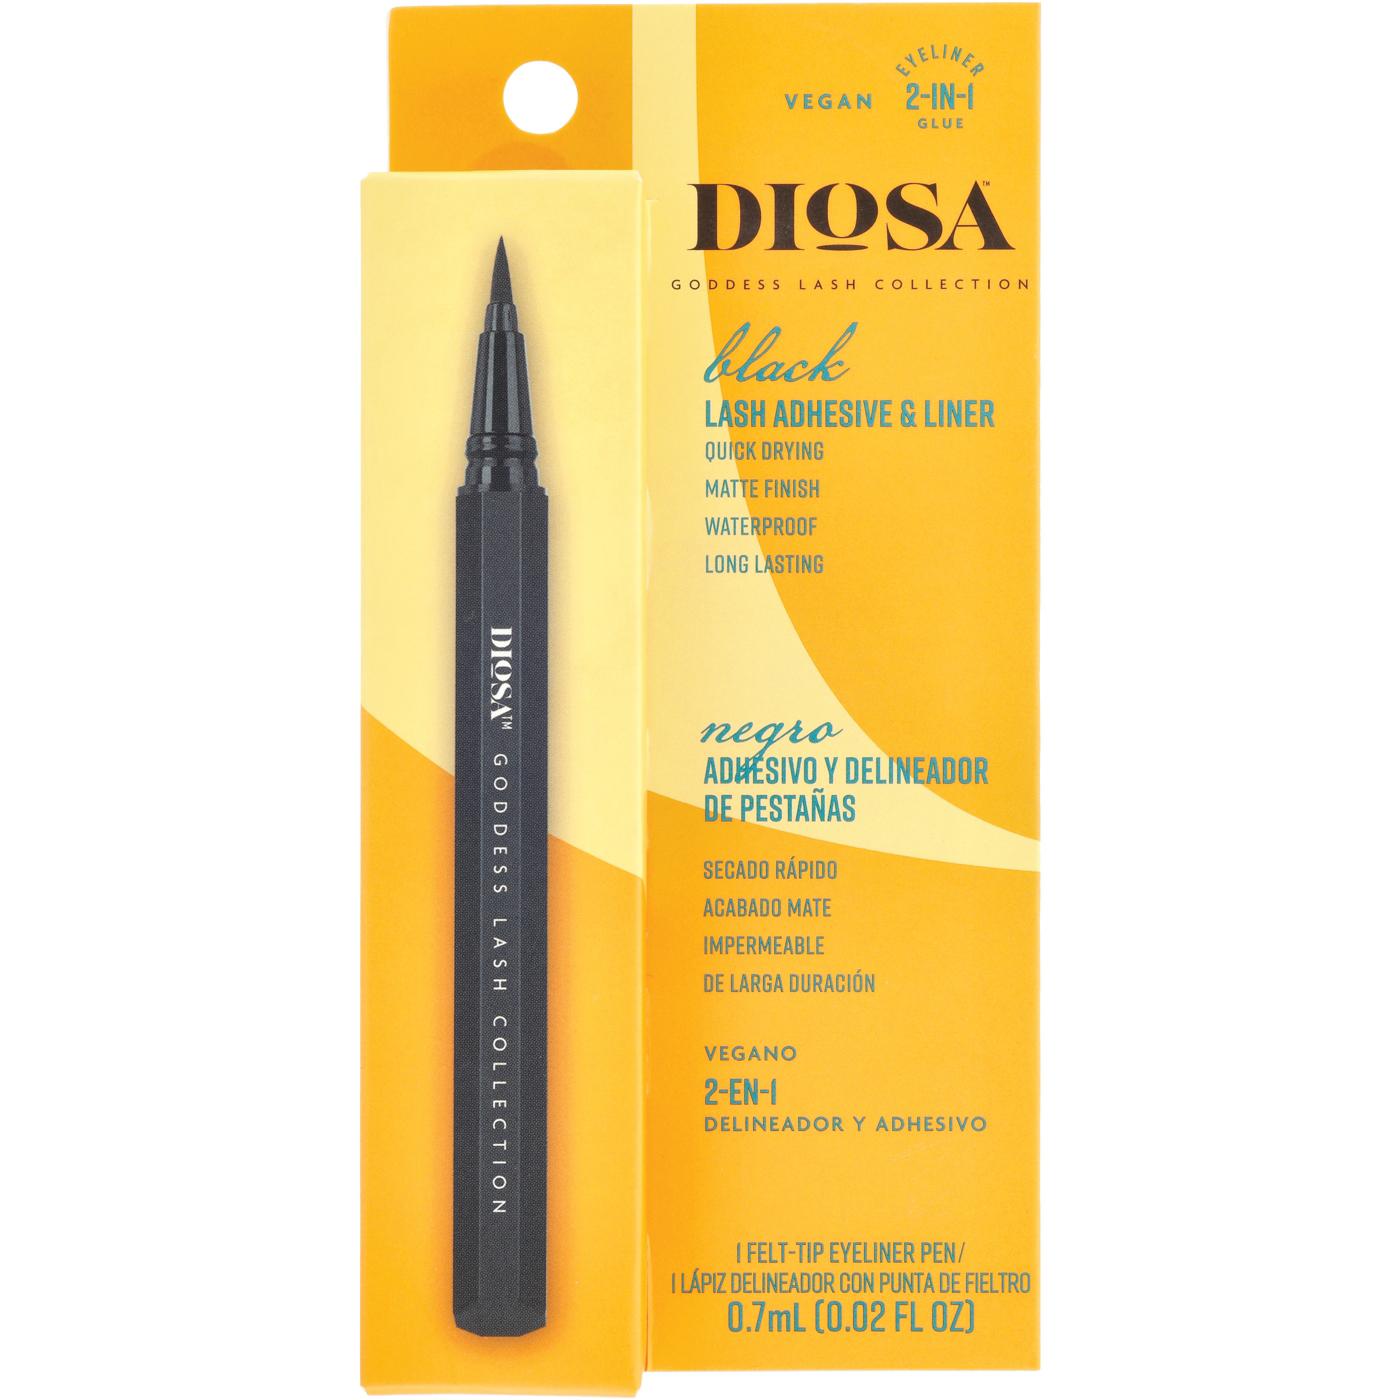 Diosa Lash Adhesive & Liner – Black; image 1 of 5